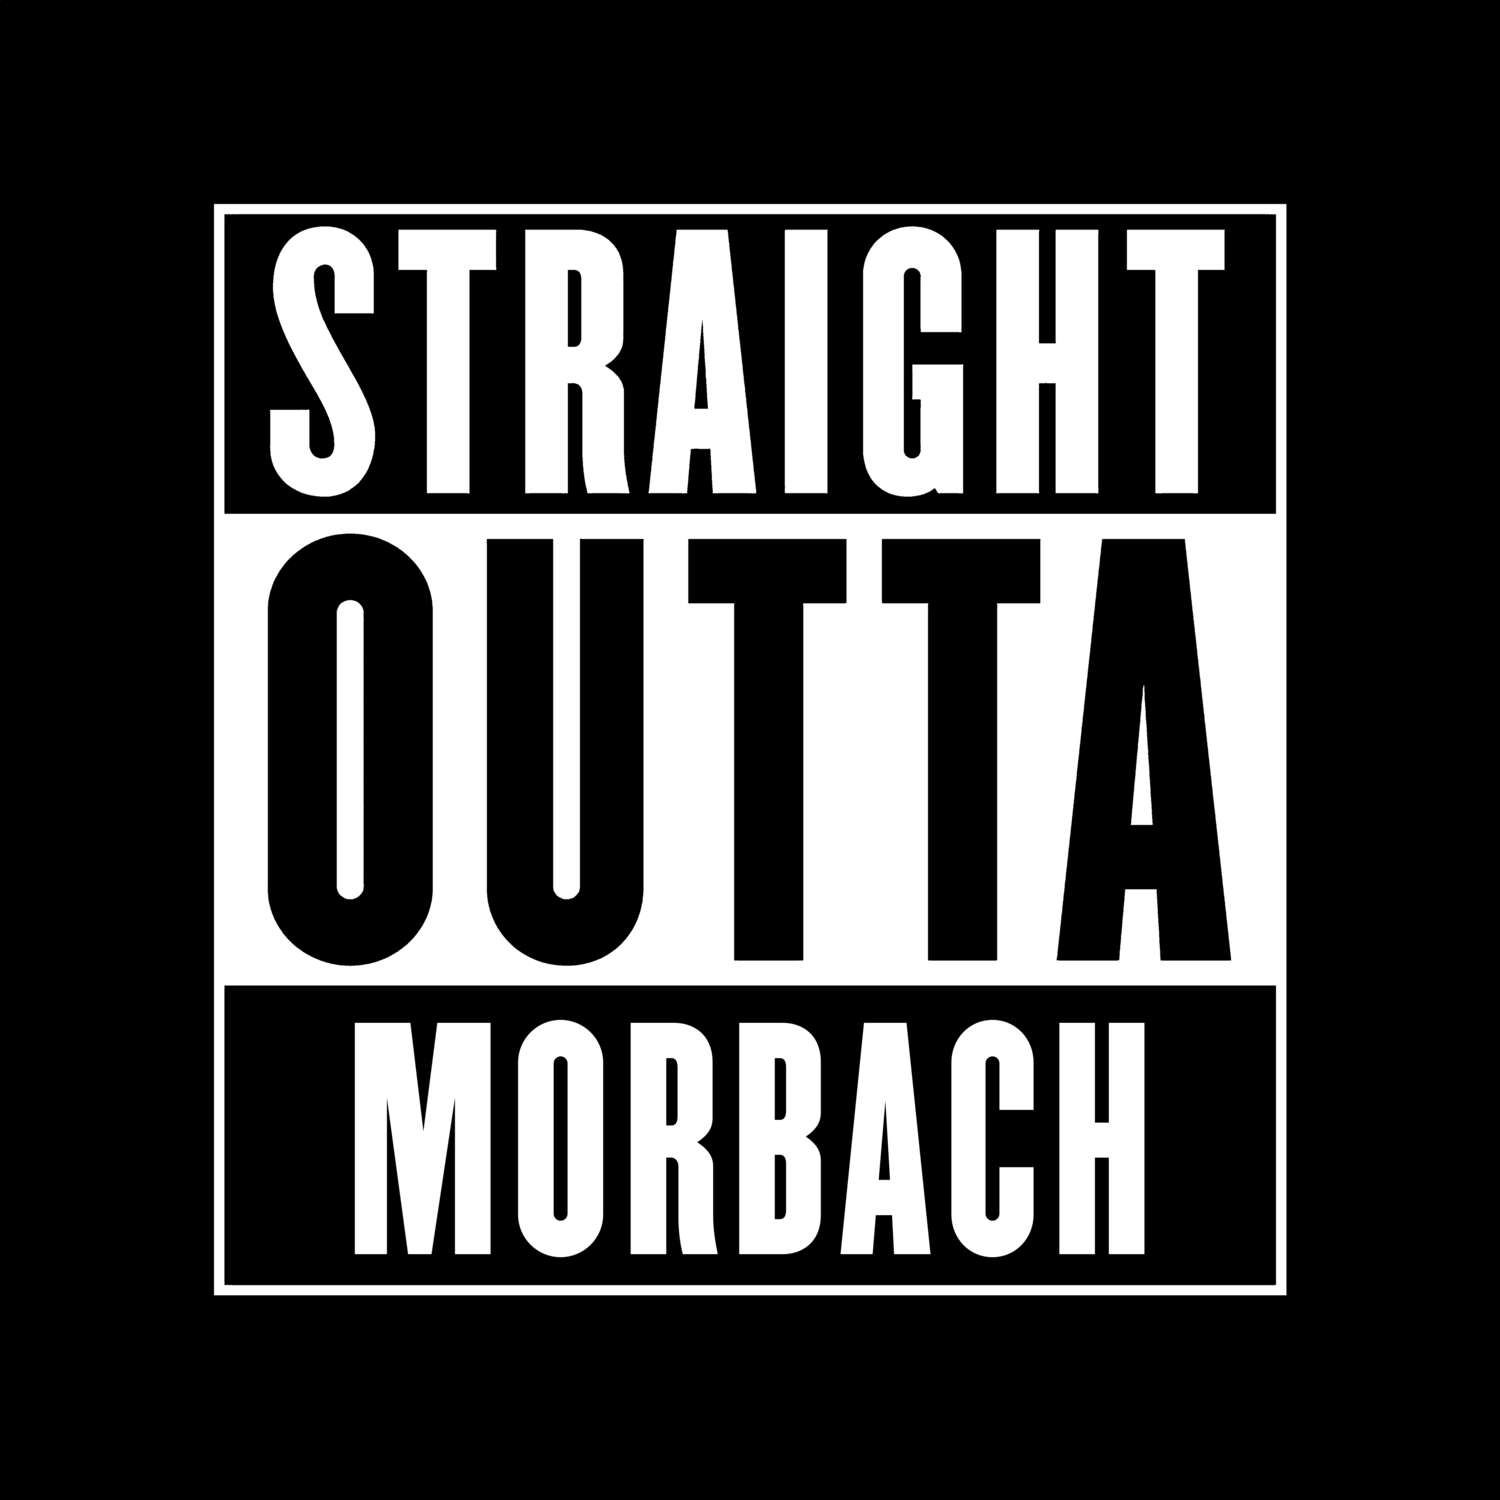 Morbach T-Shirt »Straight Outta«